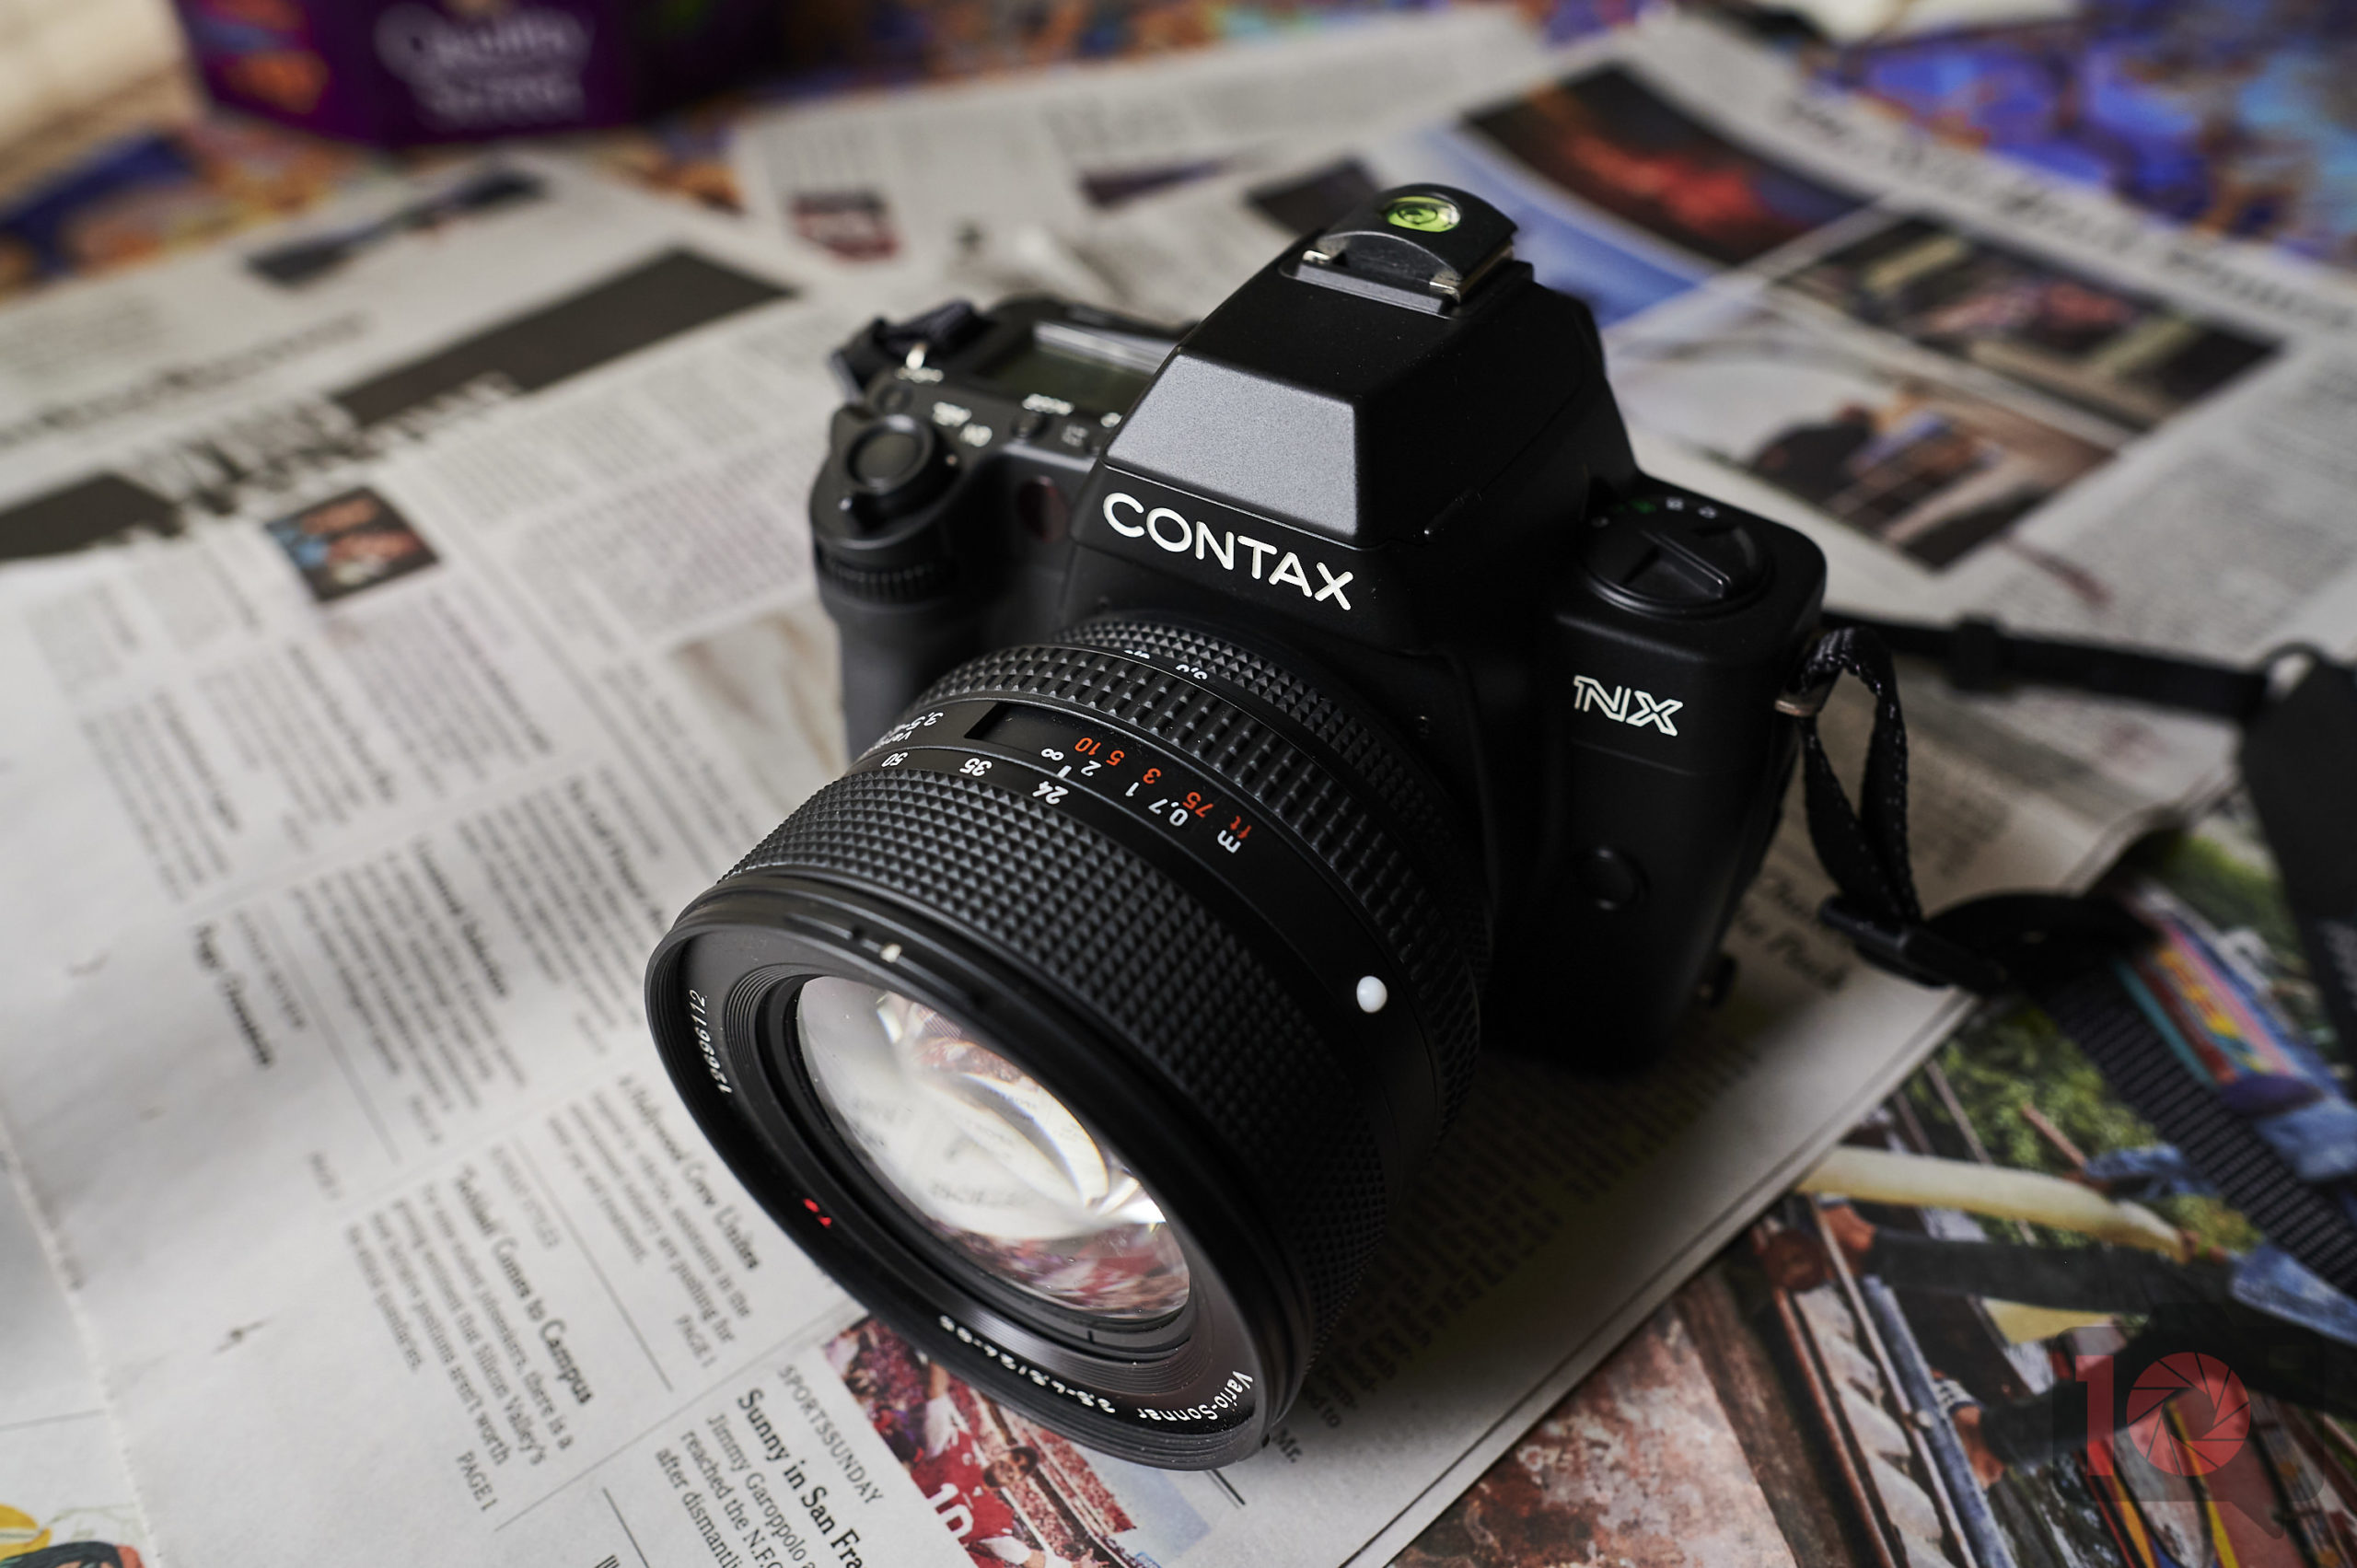 Chris Gampat The Phoblographer Nikon 24mm f1.8 Z review images 4.51-25s800